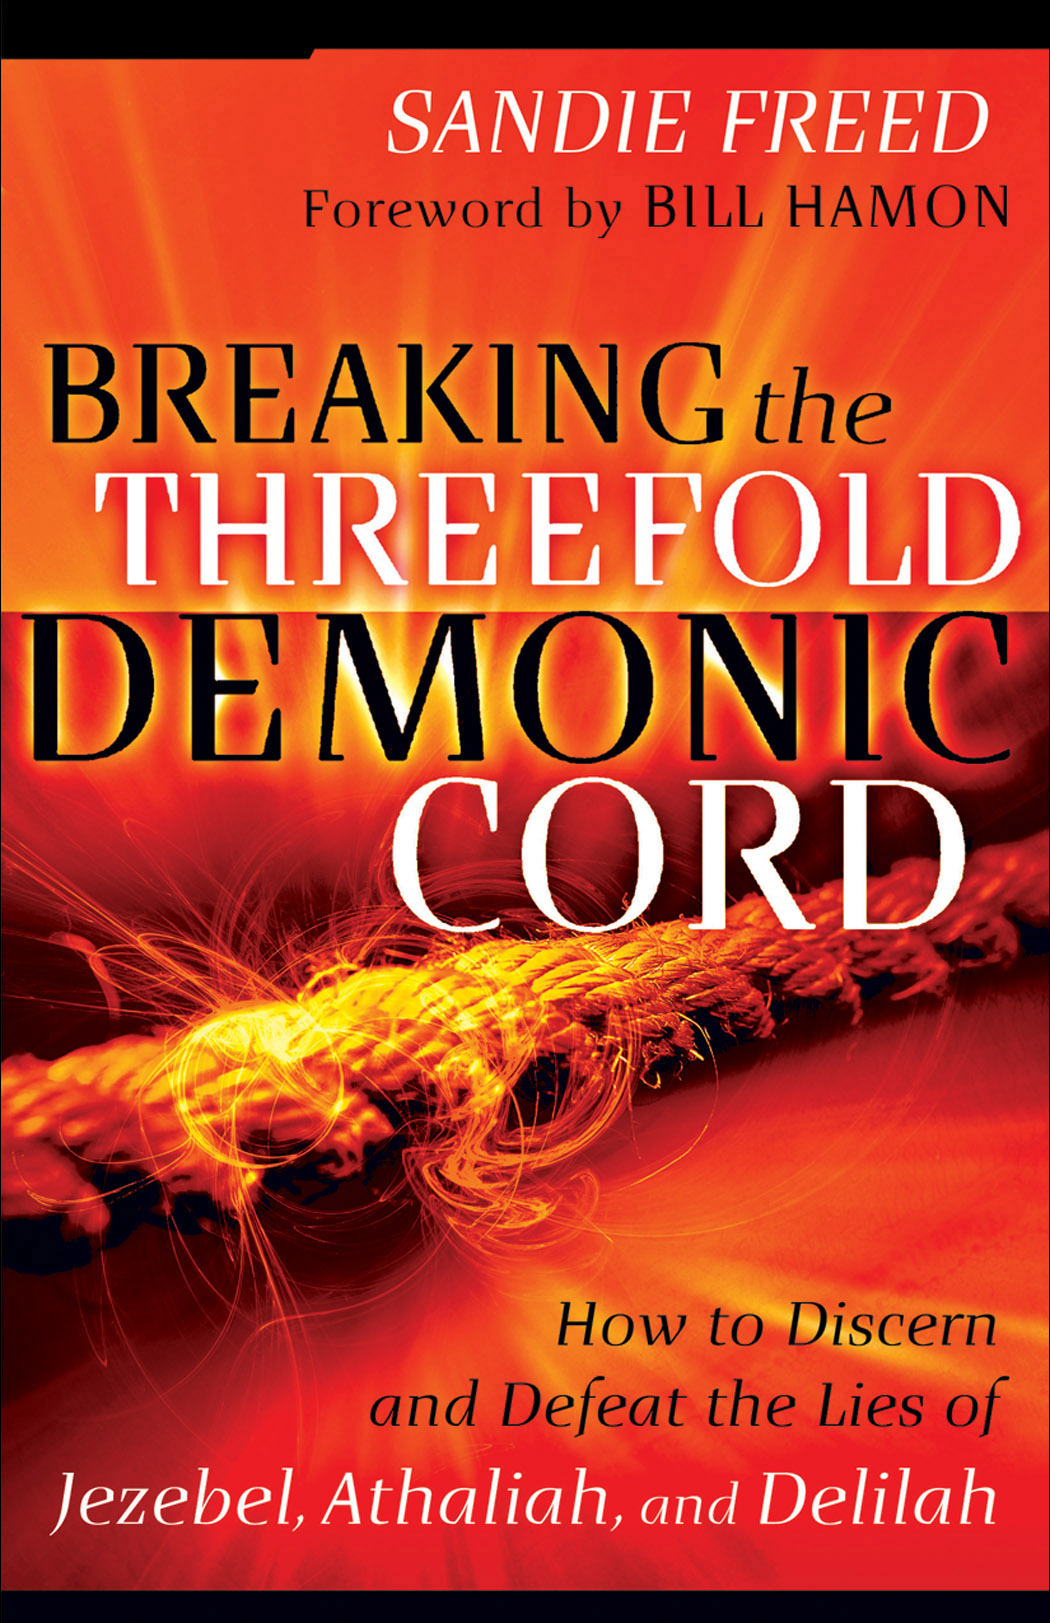 Breaking the Threefold Demonic Cord